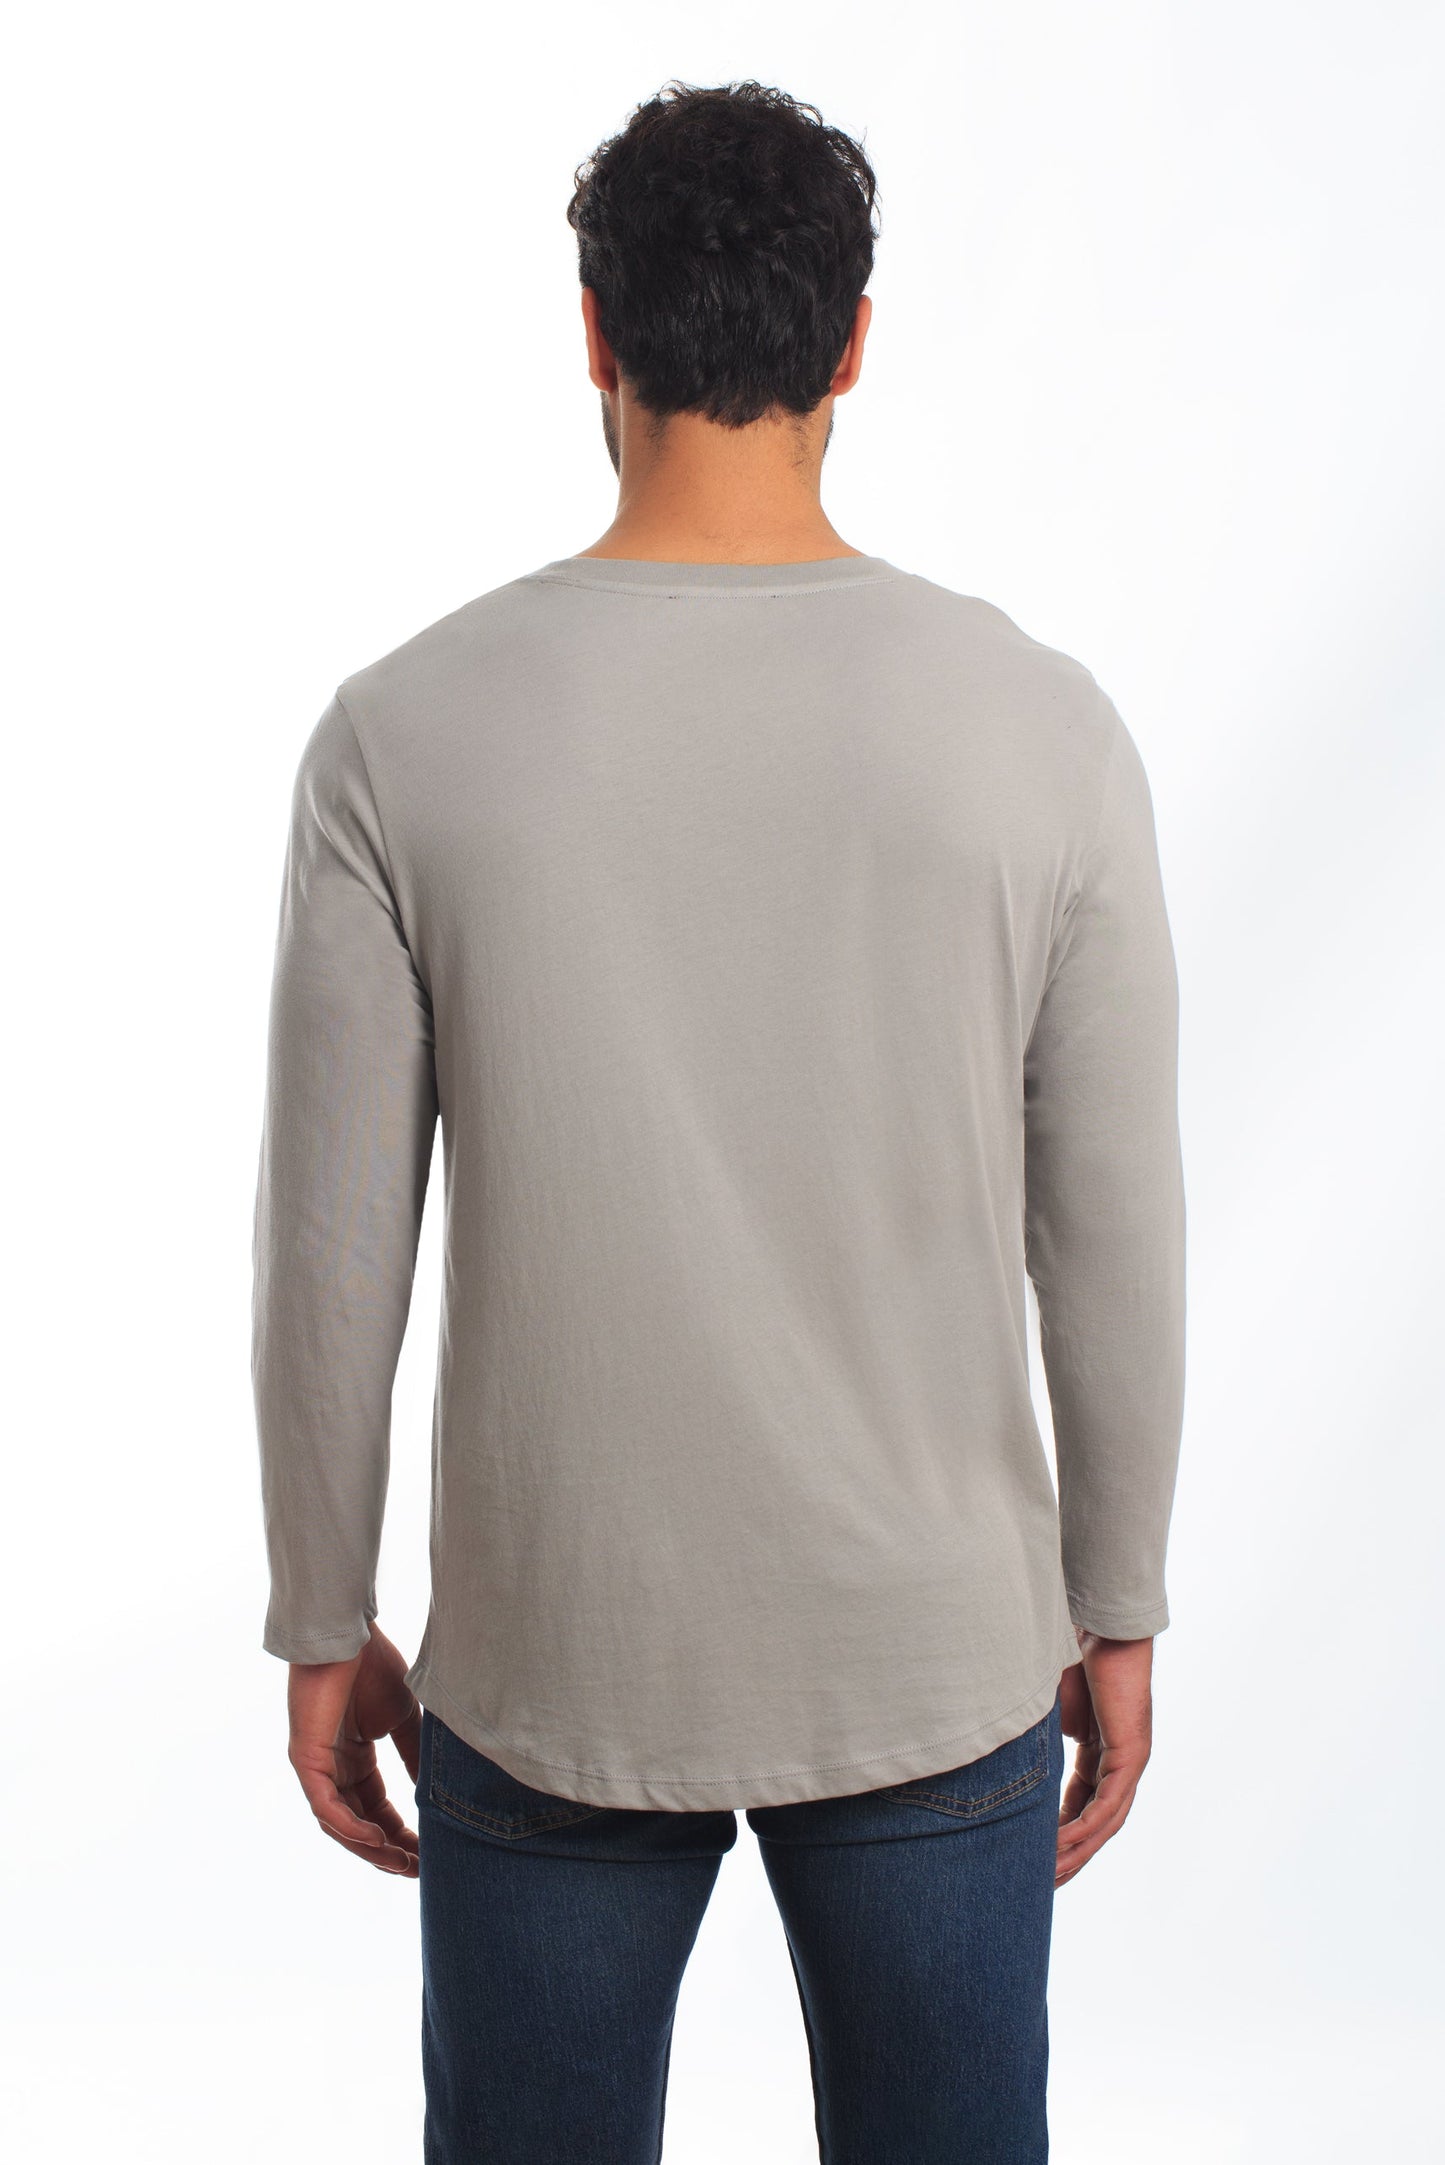 Grey Long Sleeve T-Shirt TEL-110 Back